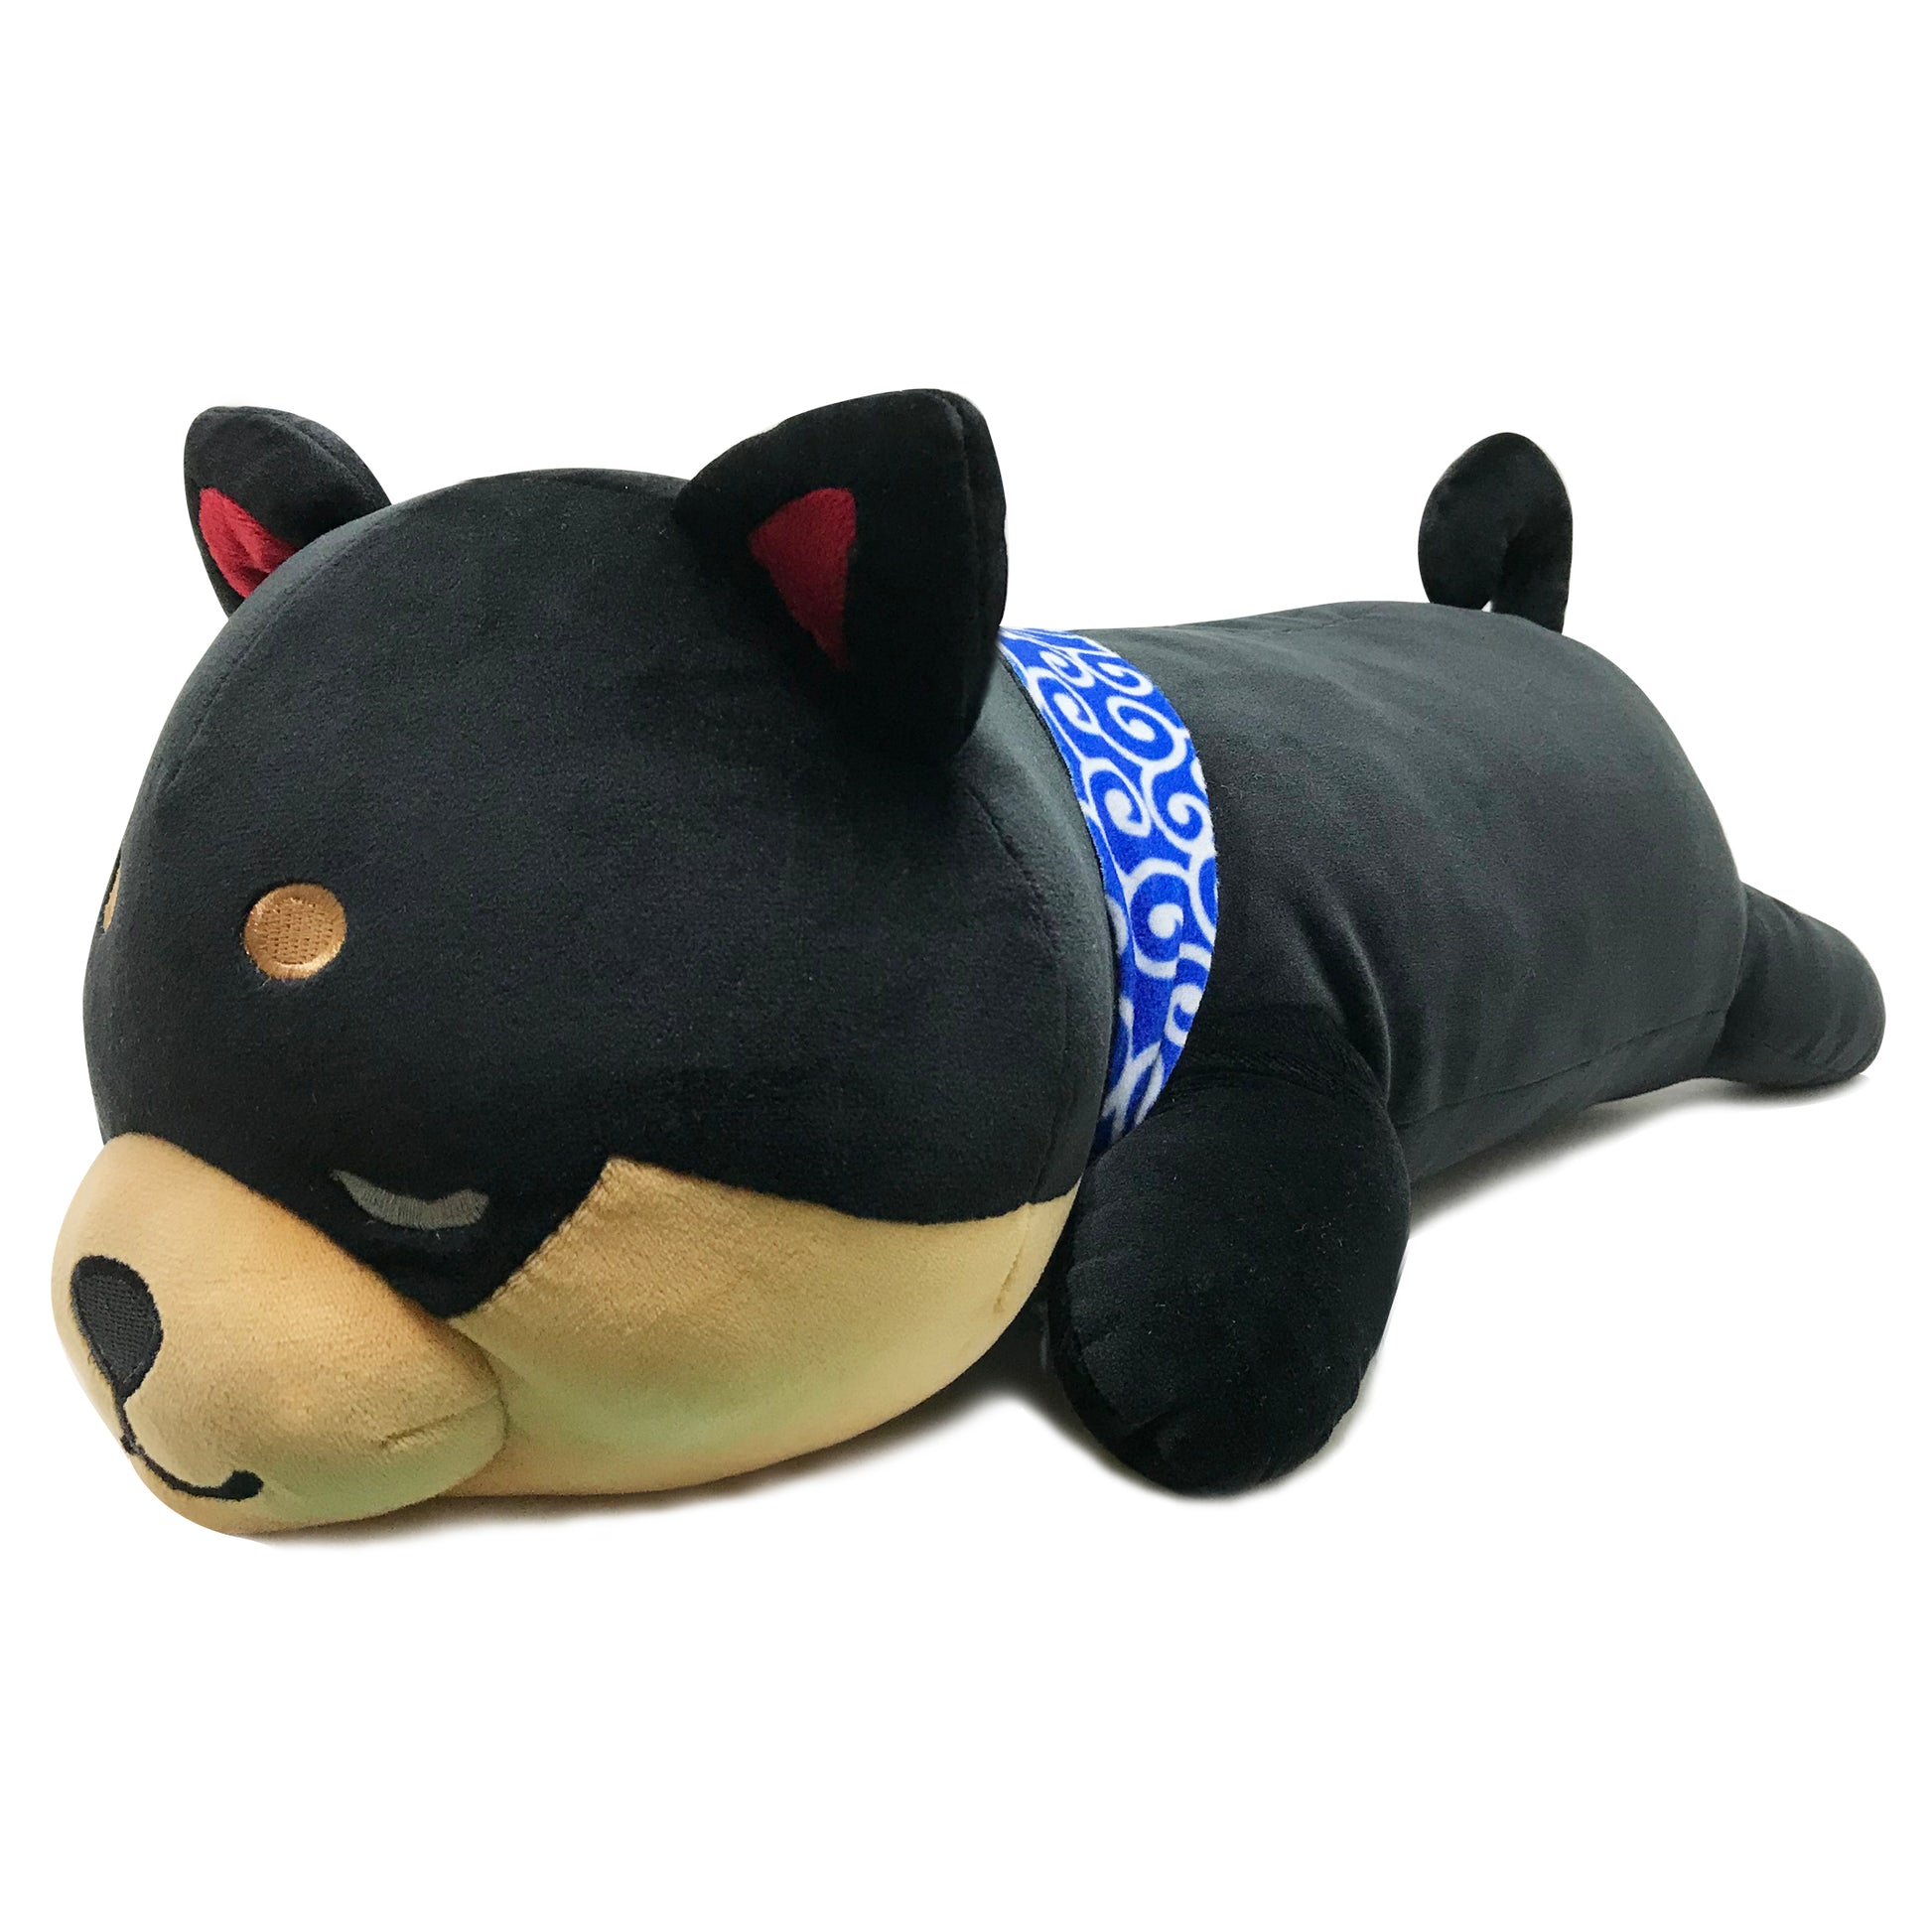 Shiba Inu Dog Keychain Cute Stuffed Animal Toy Mameshiba – e Omotenashi  ONLINE STORE